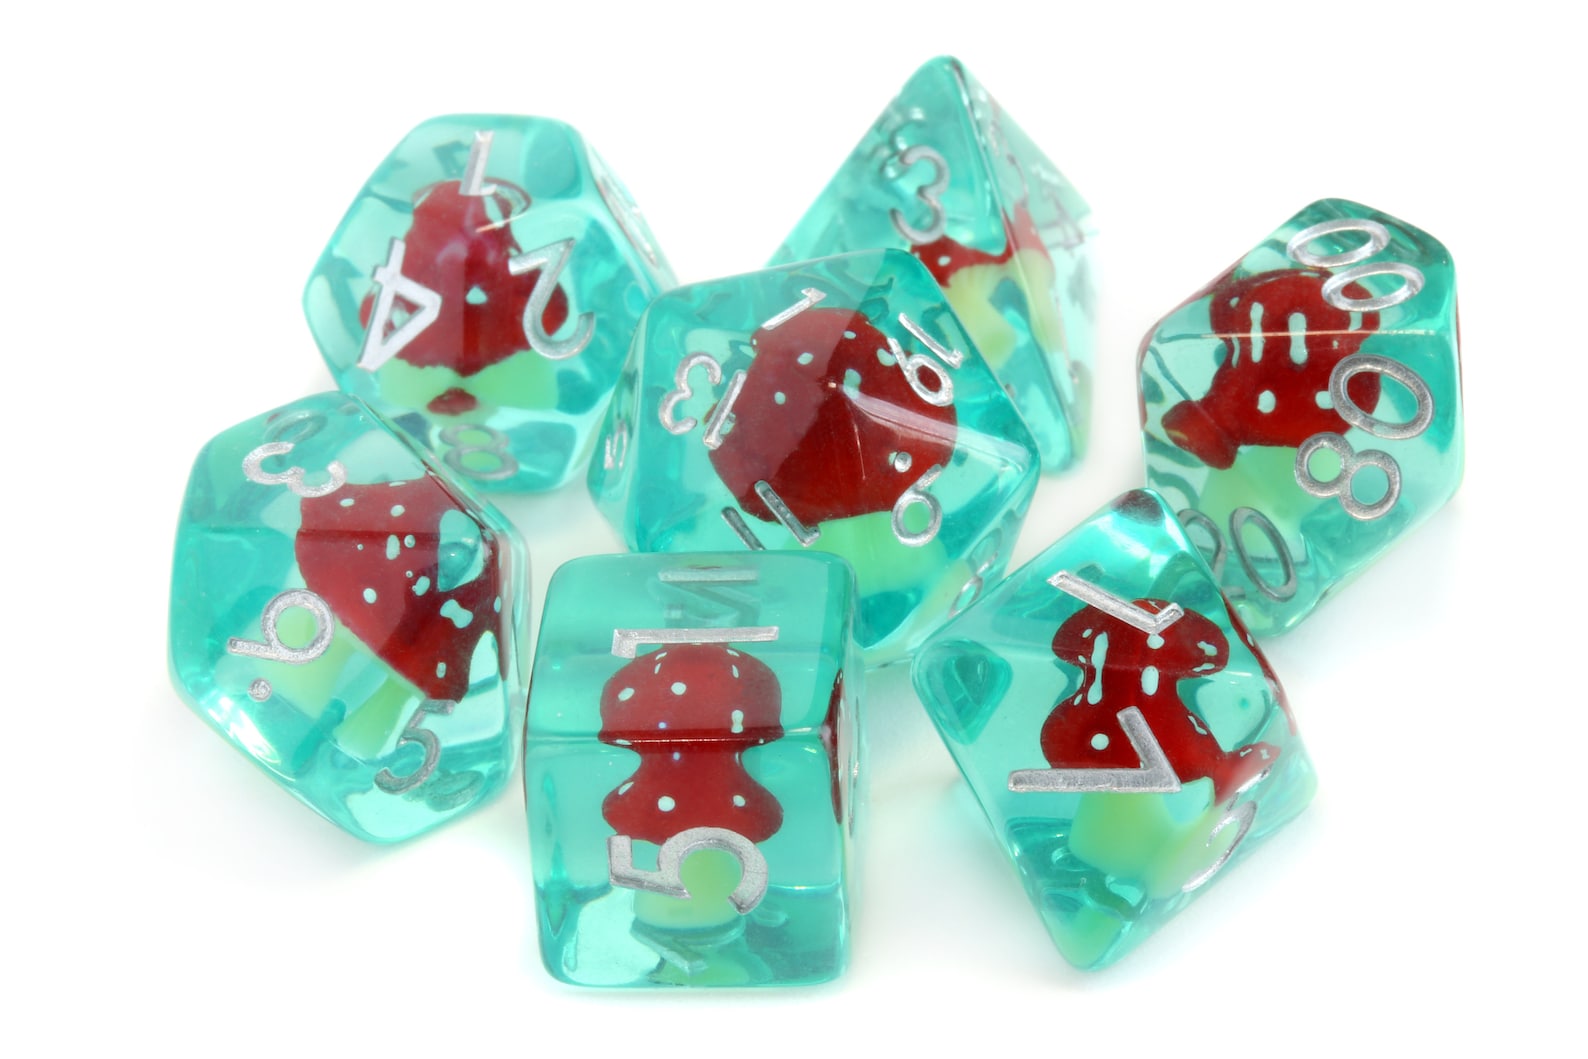 Red Mushroom dice set - The Wizard's Vault